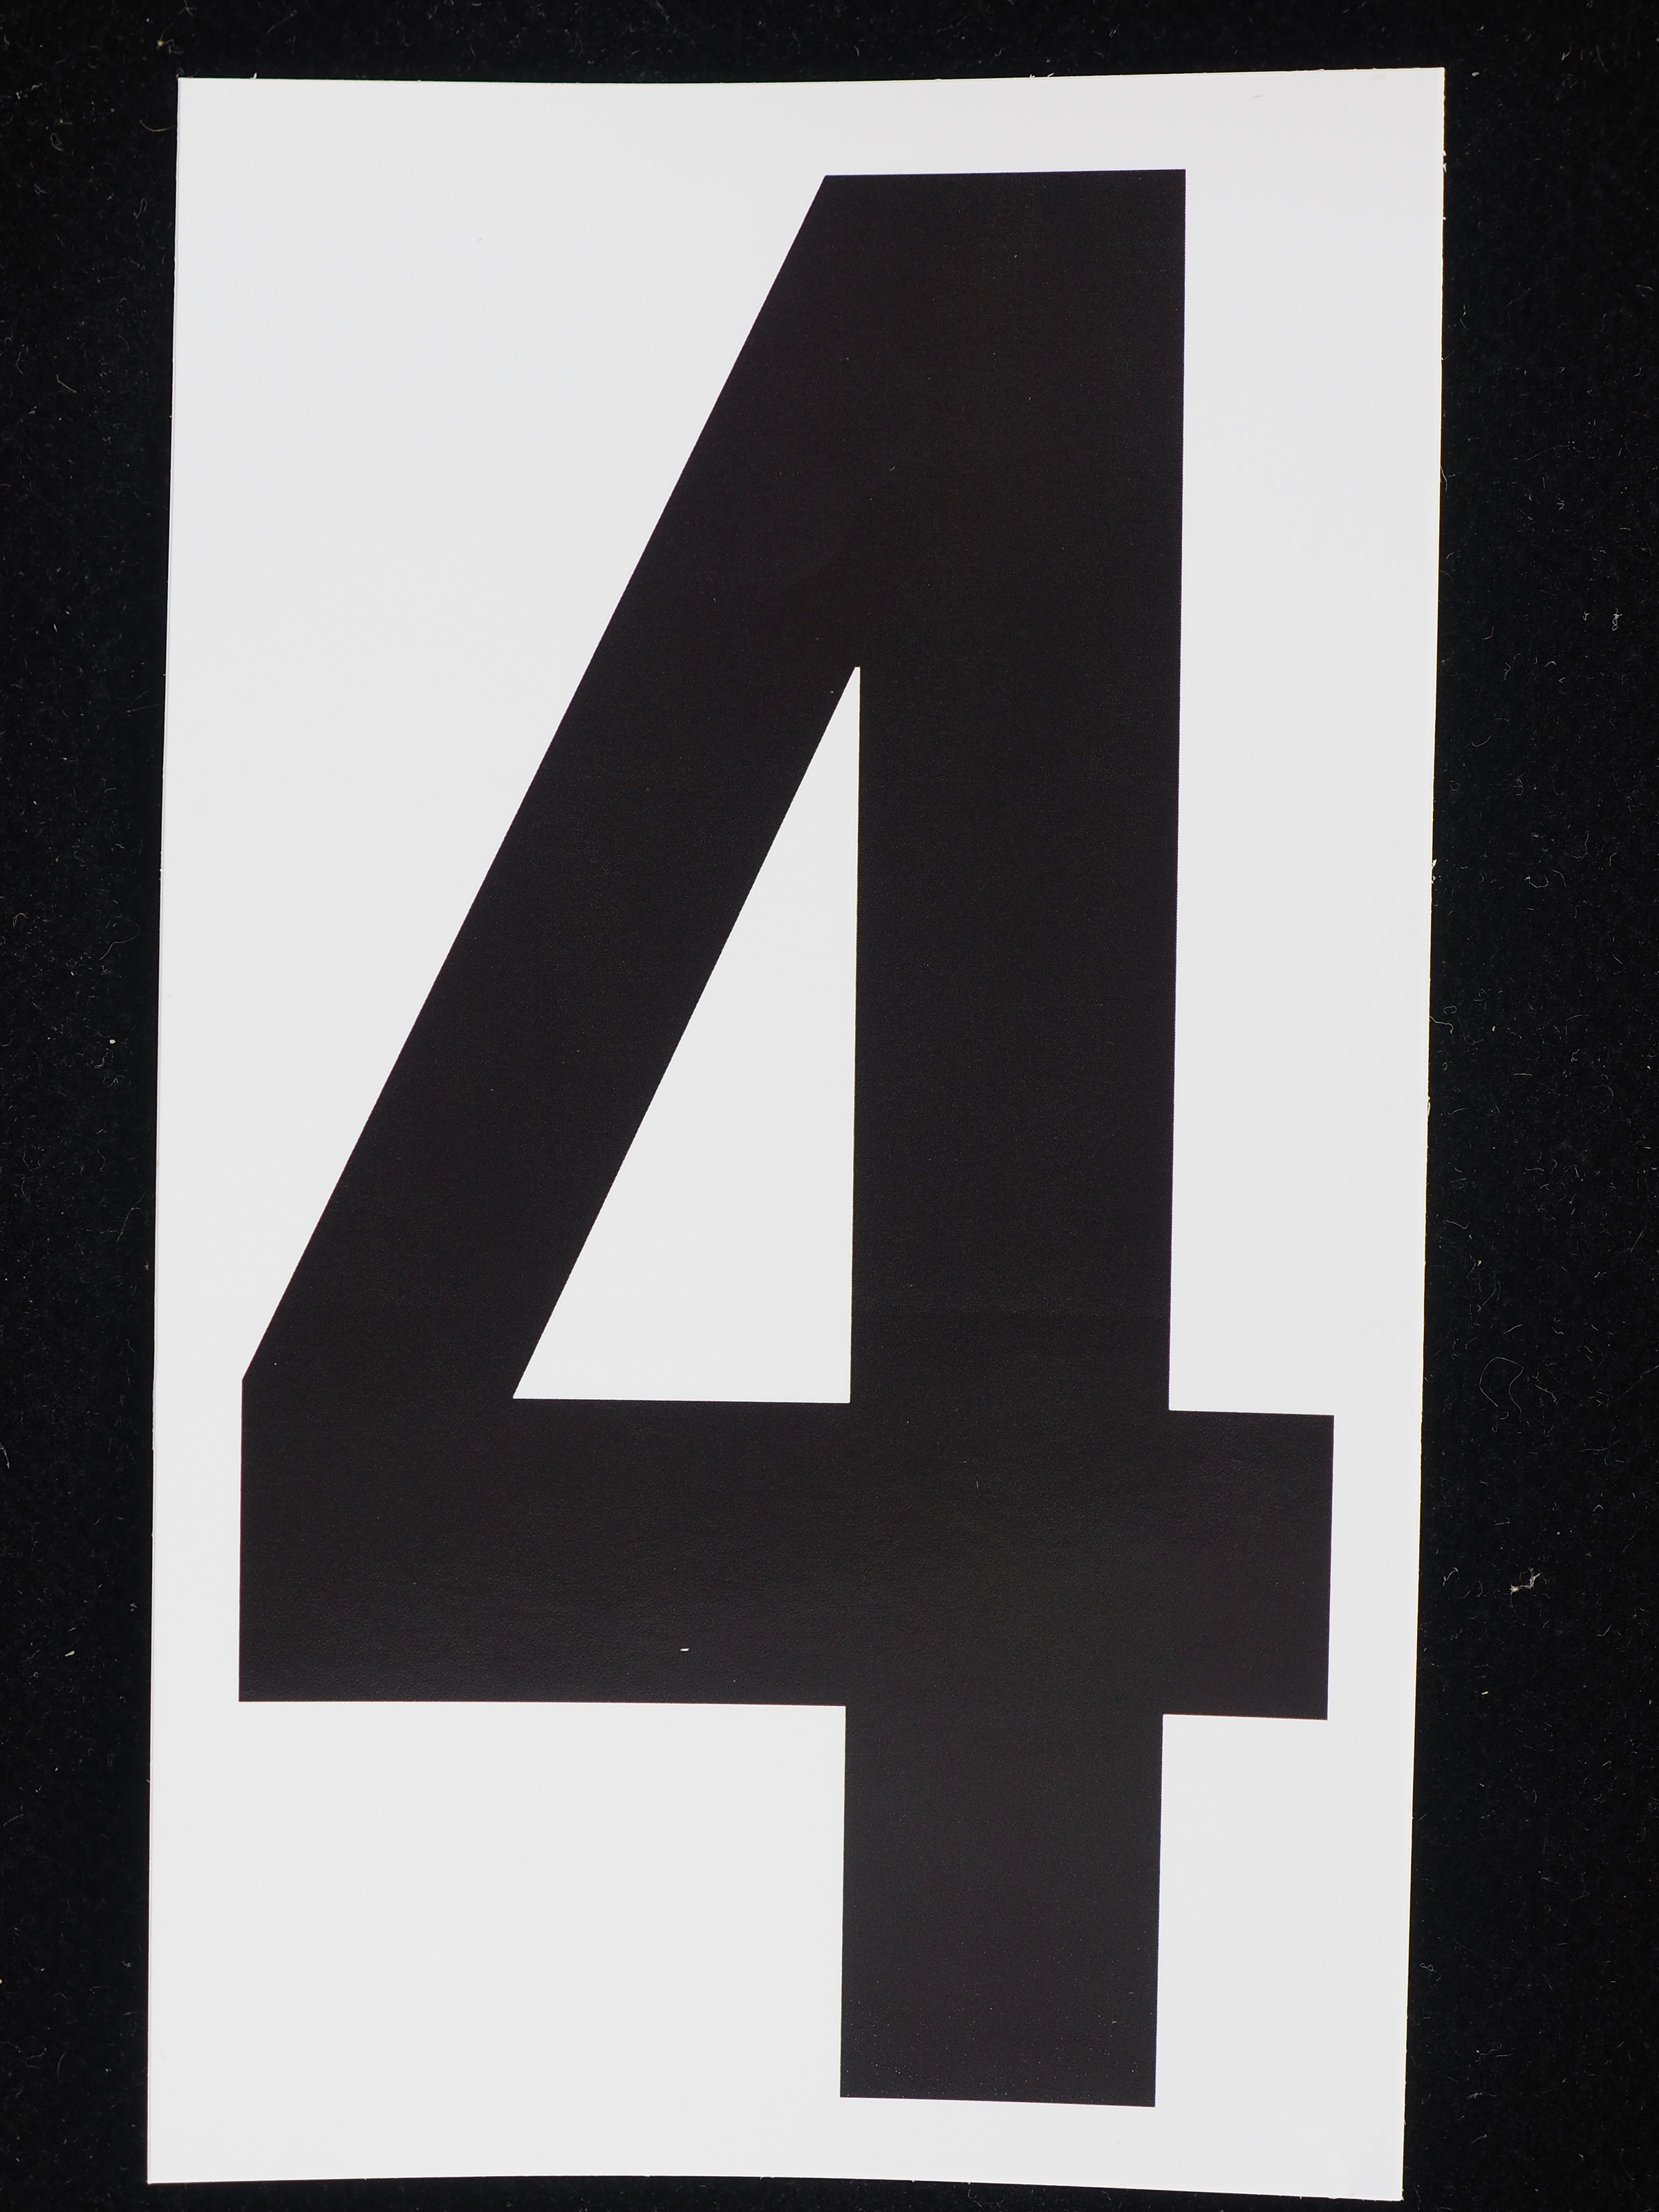 10-5" Sticker Decal Vinyl Adhesive Address Numbers Black & White No.1 USA MADE 